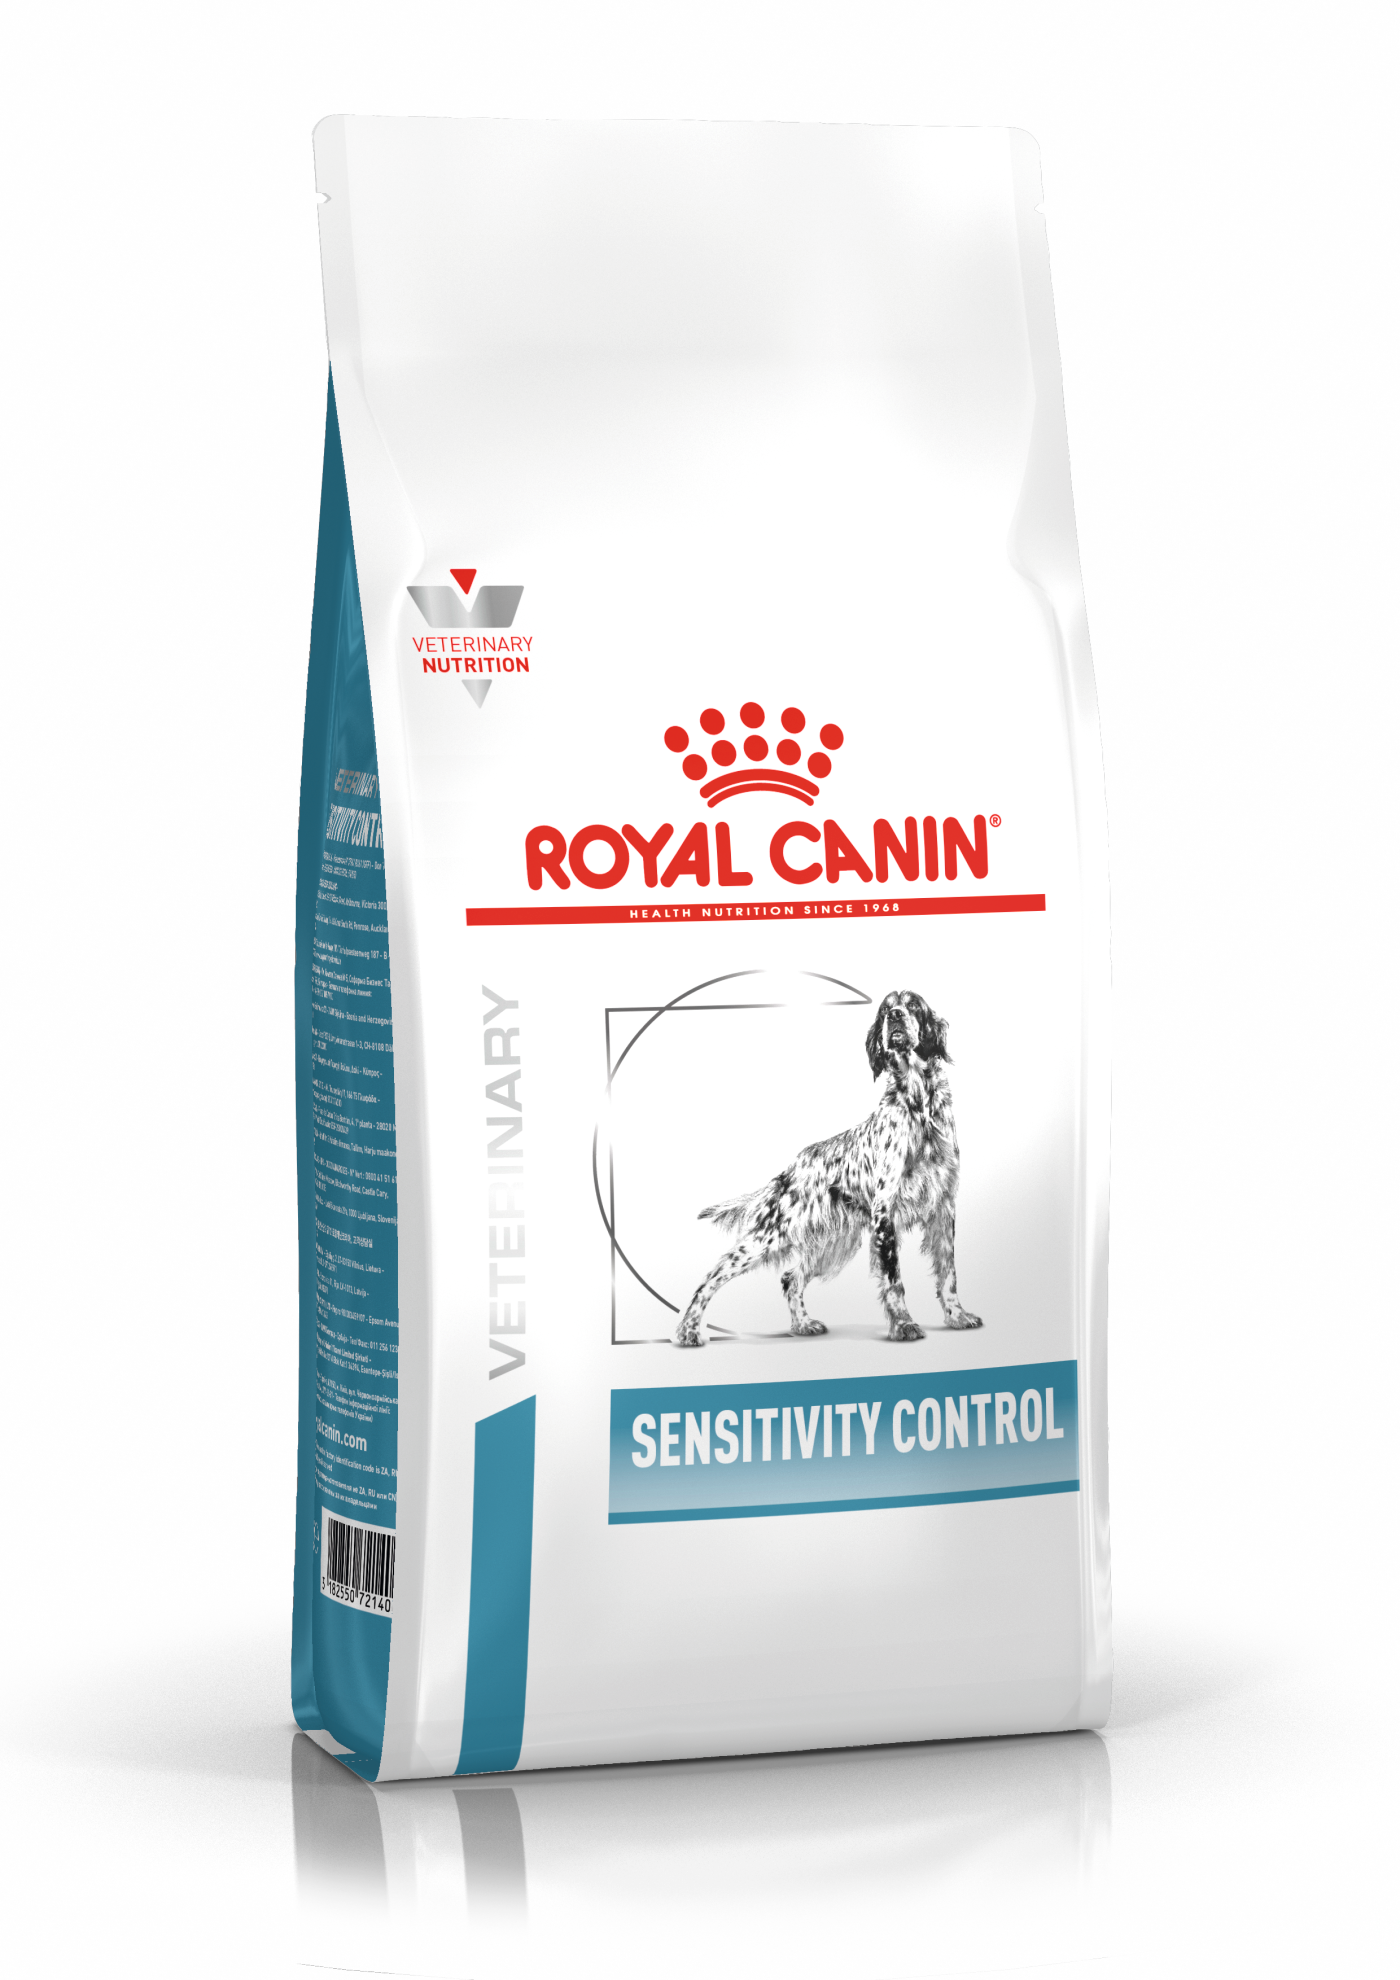 Royal Canin Sensitivity Control hond 2 x 1,5 kg